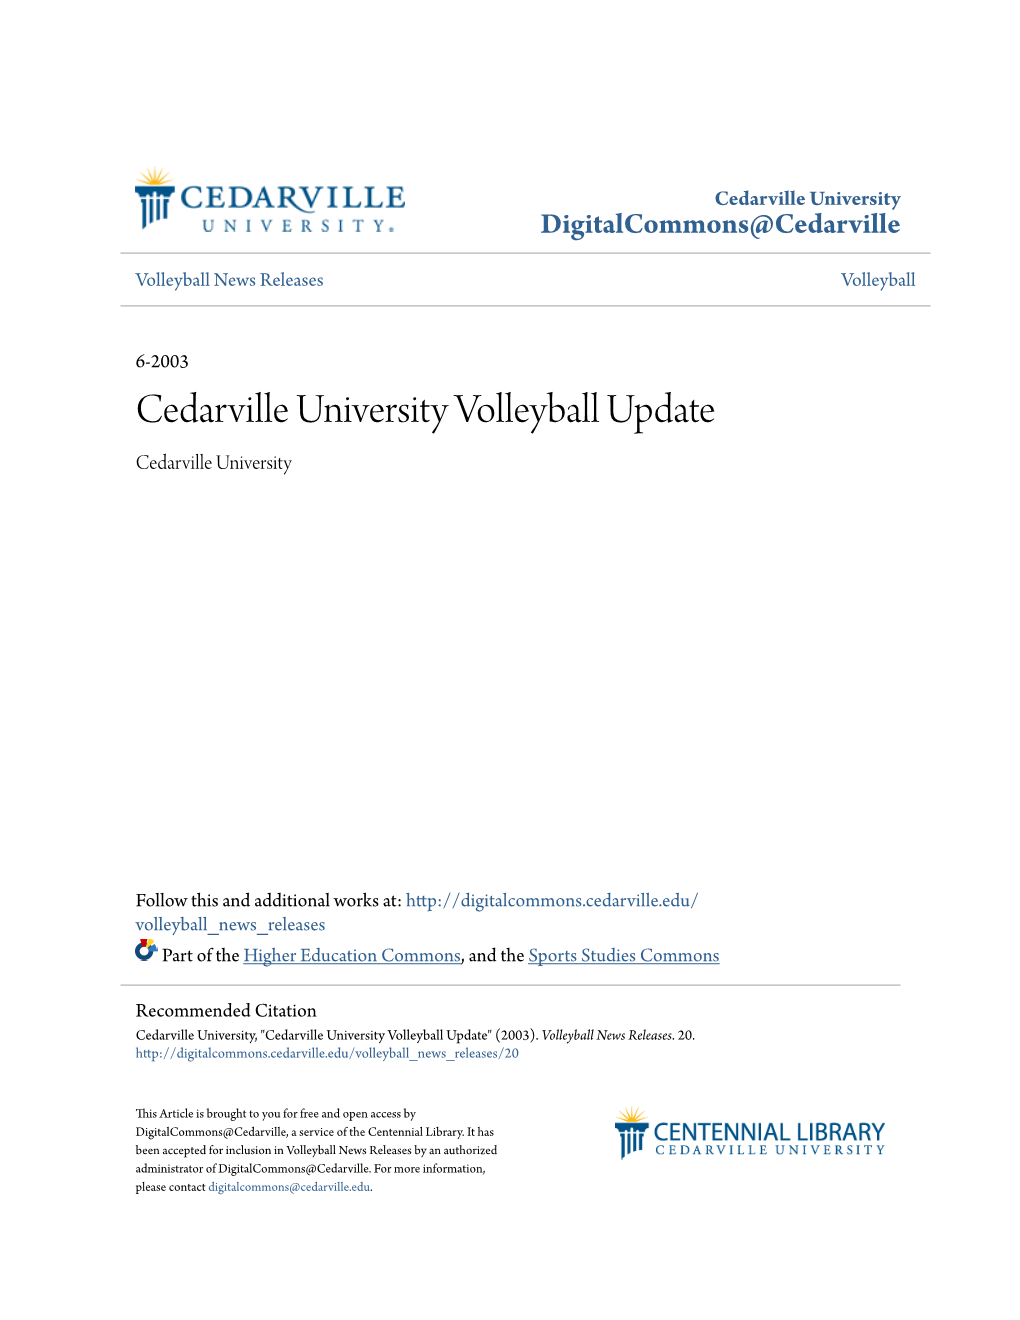 Cedarville University Volleyball Update Cedarville University